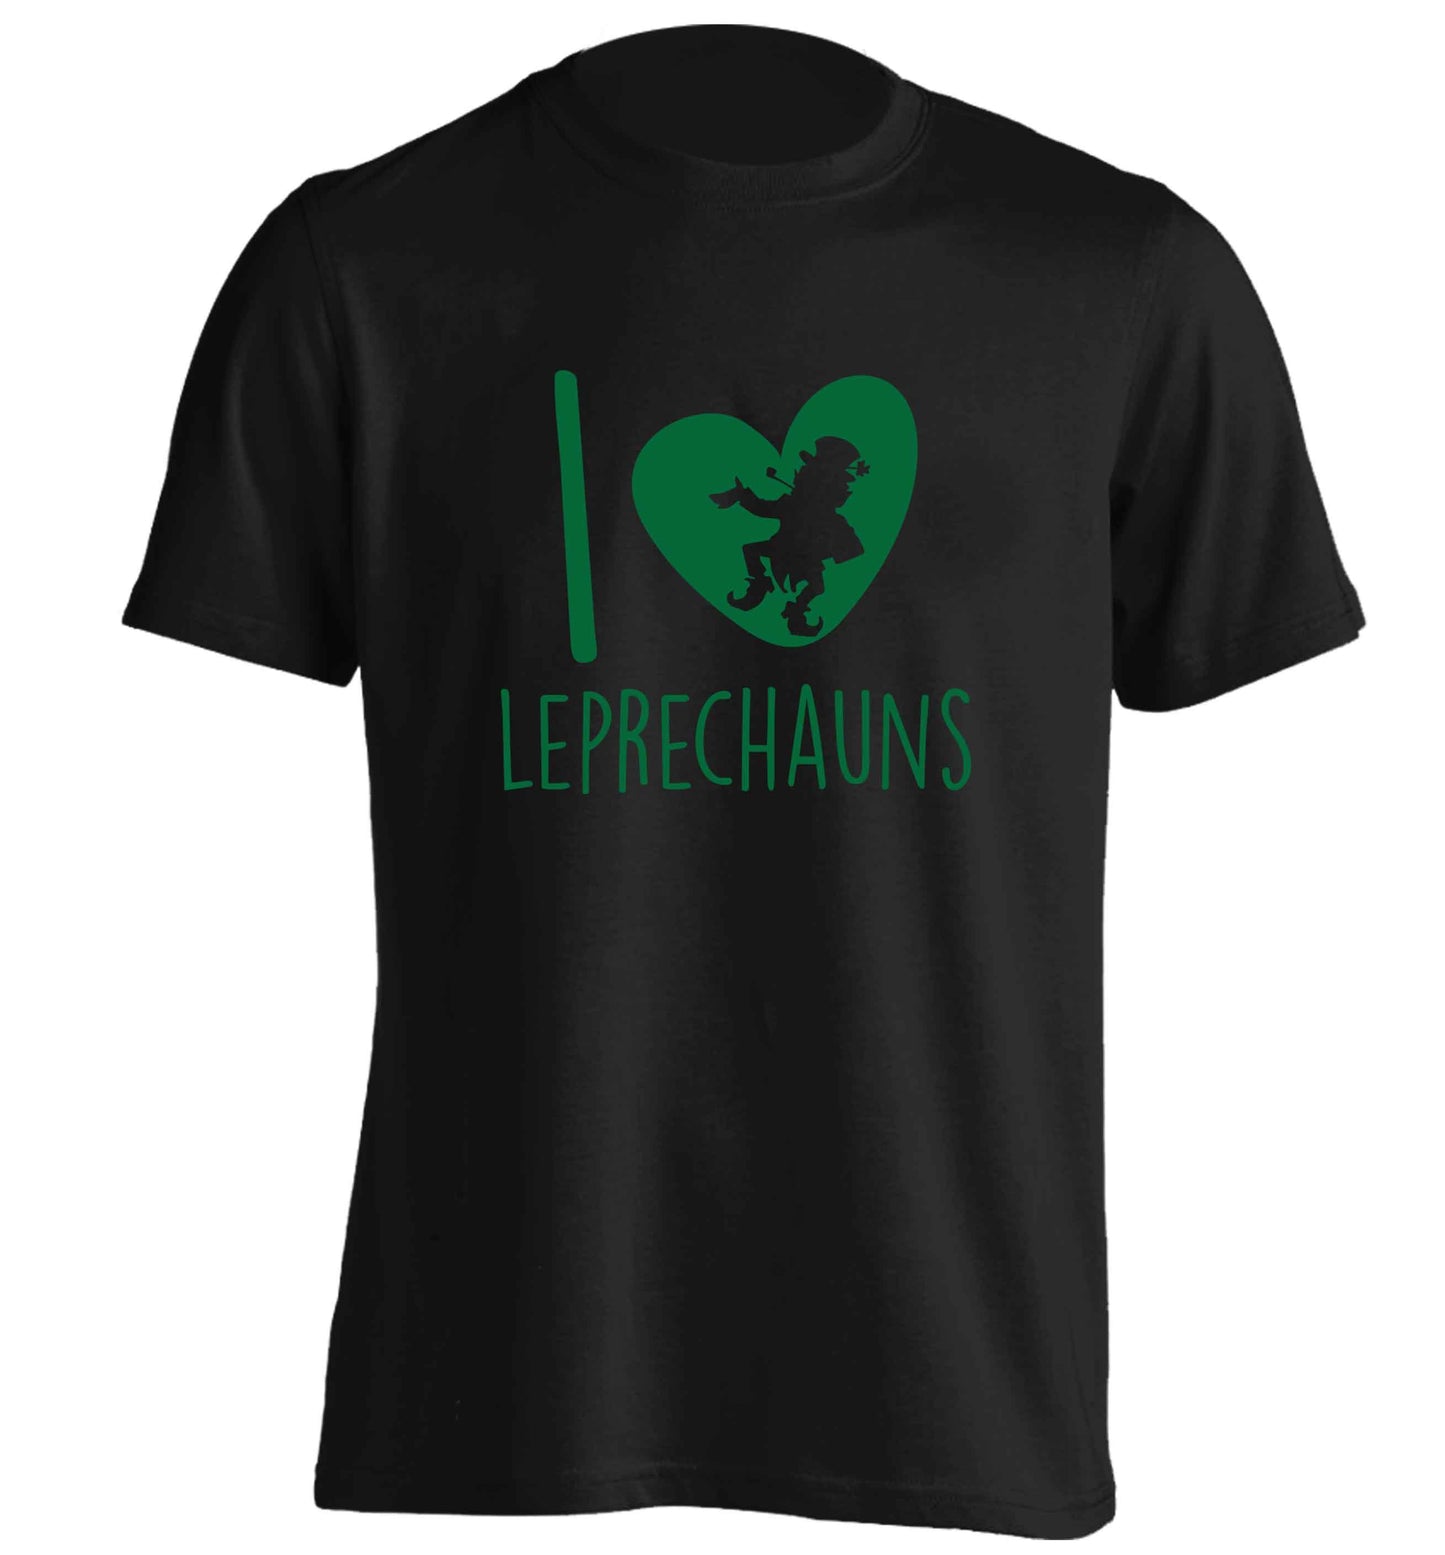 I love leprechauns adults unisex black Tshirt 2XL